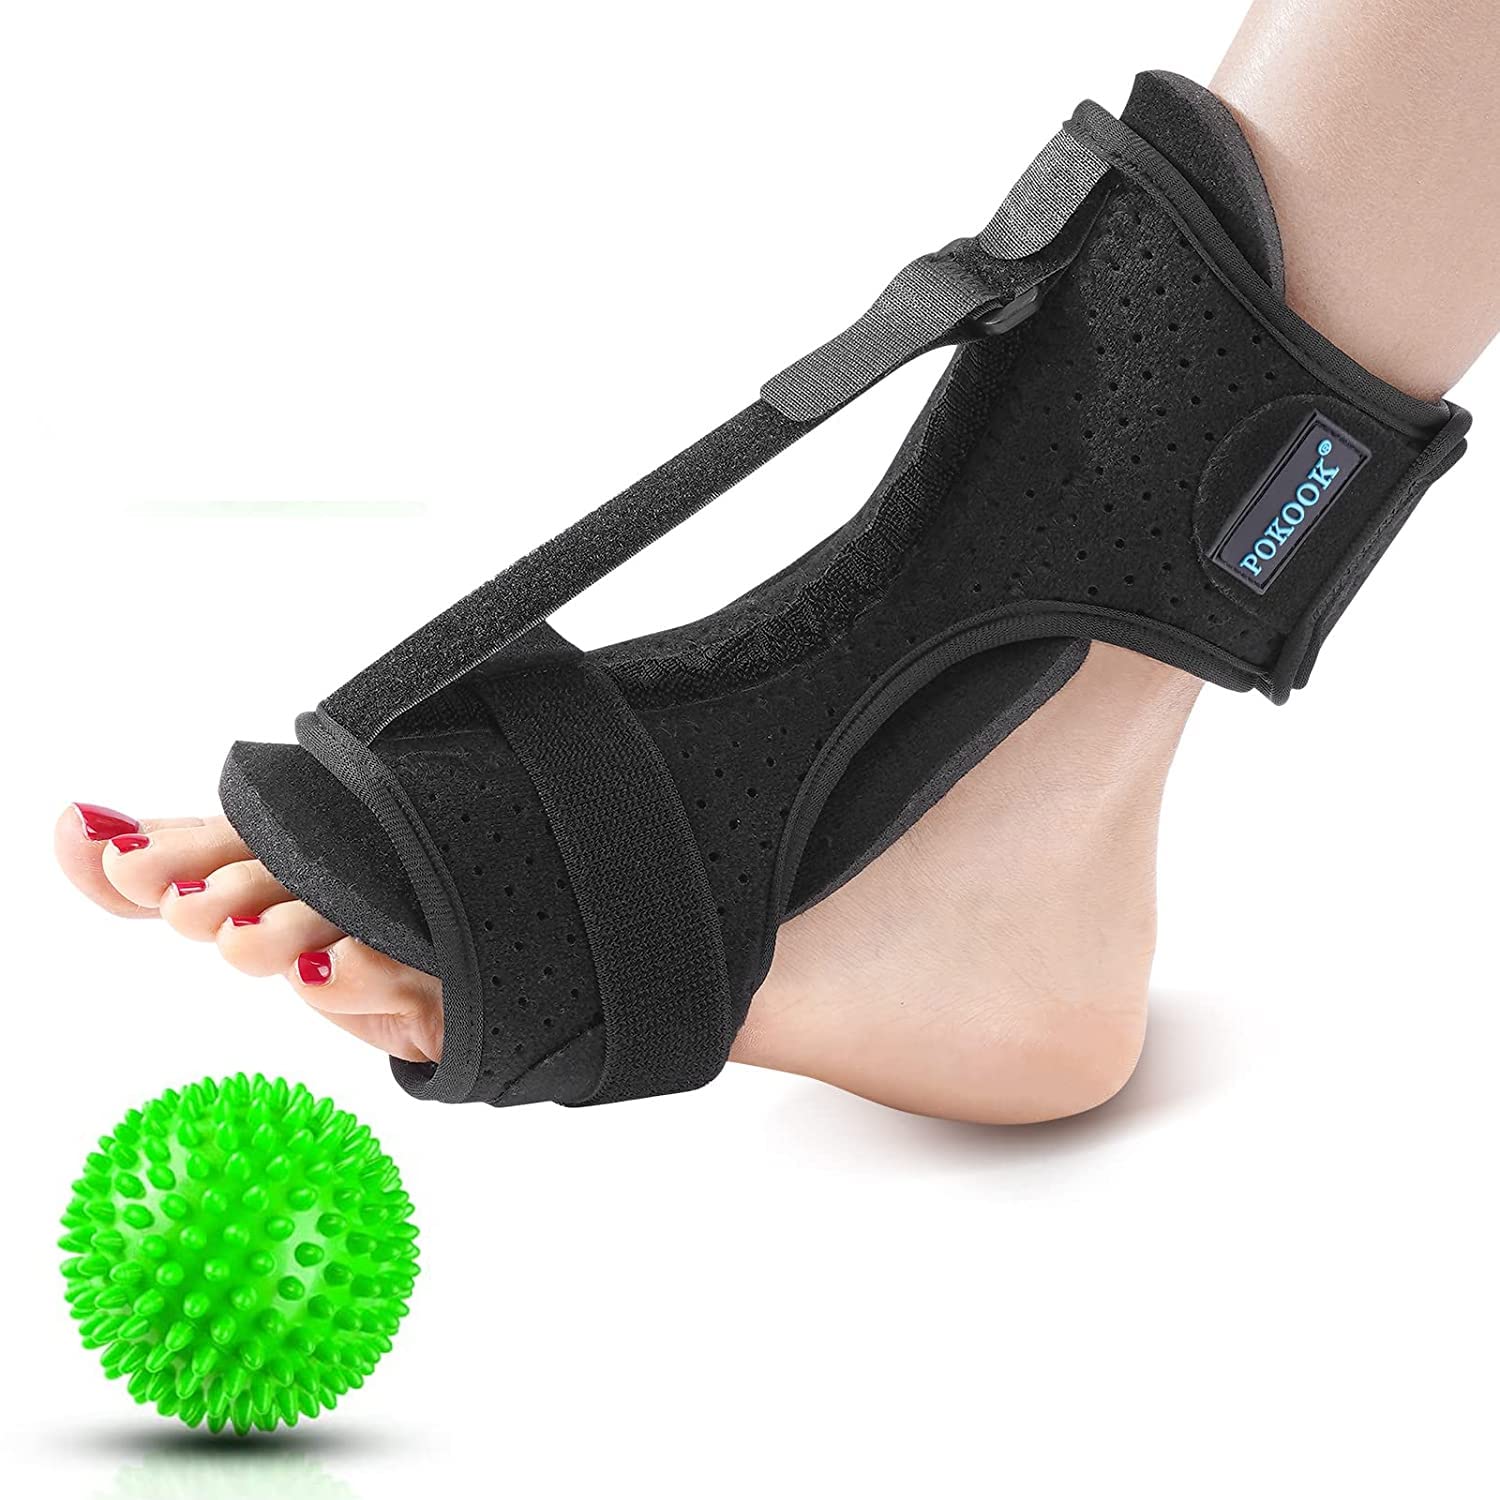 Plantar Fasciitis Night Splint Adjustable Foot Brace Drop Support